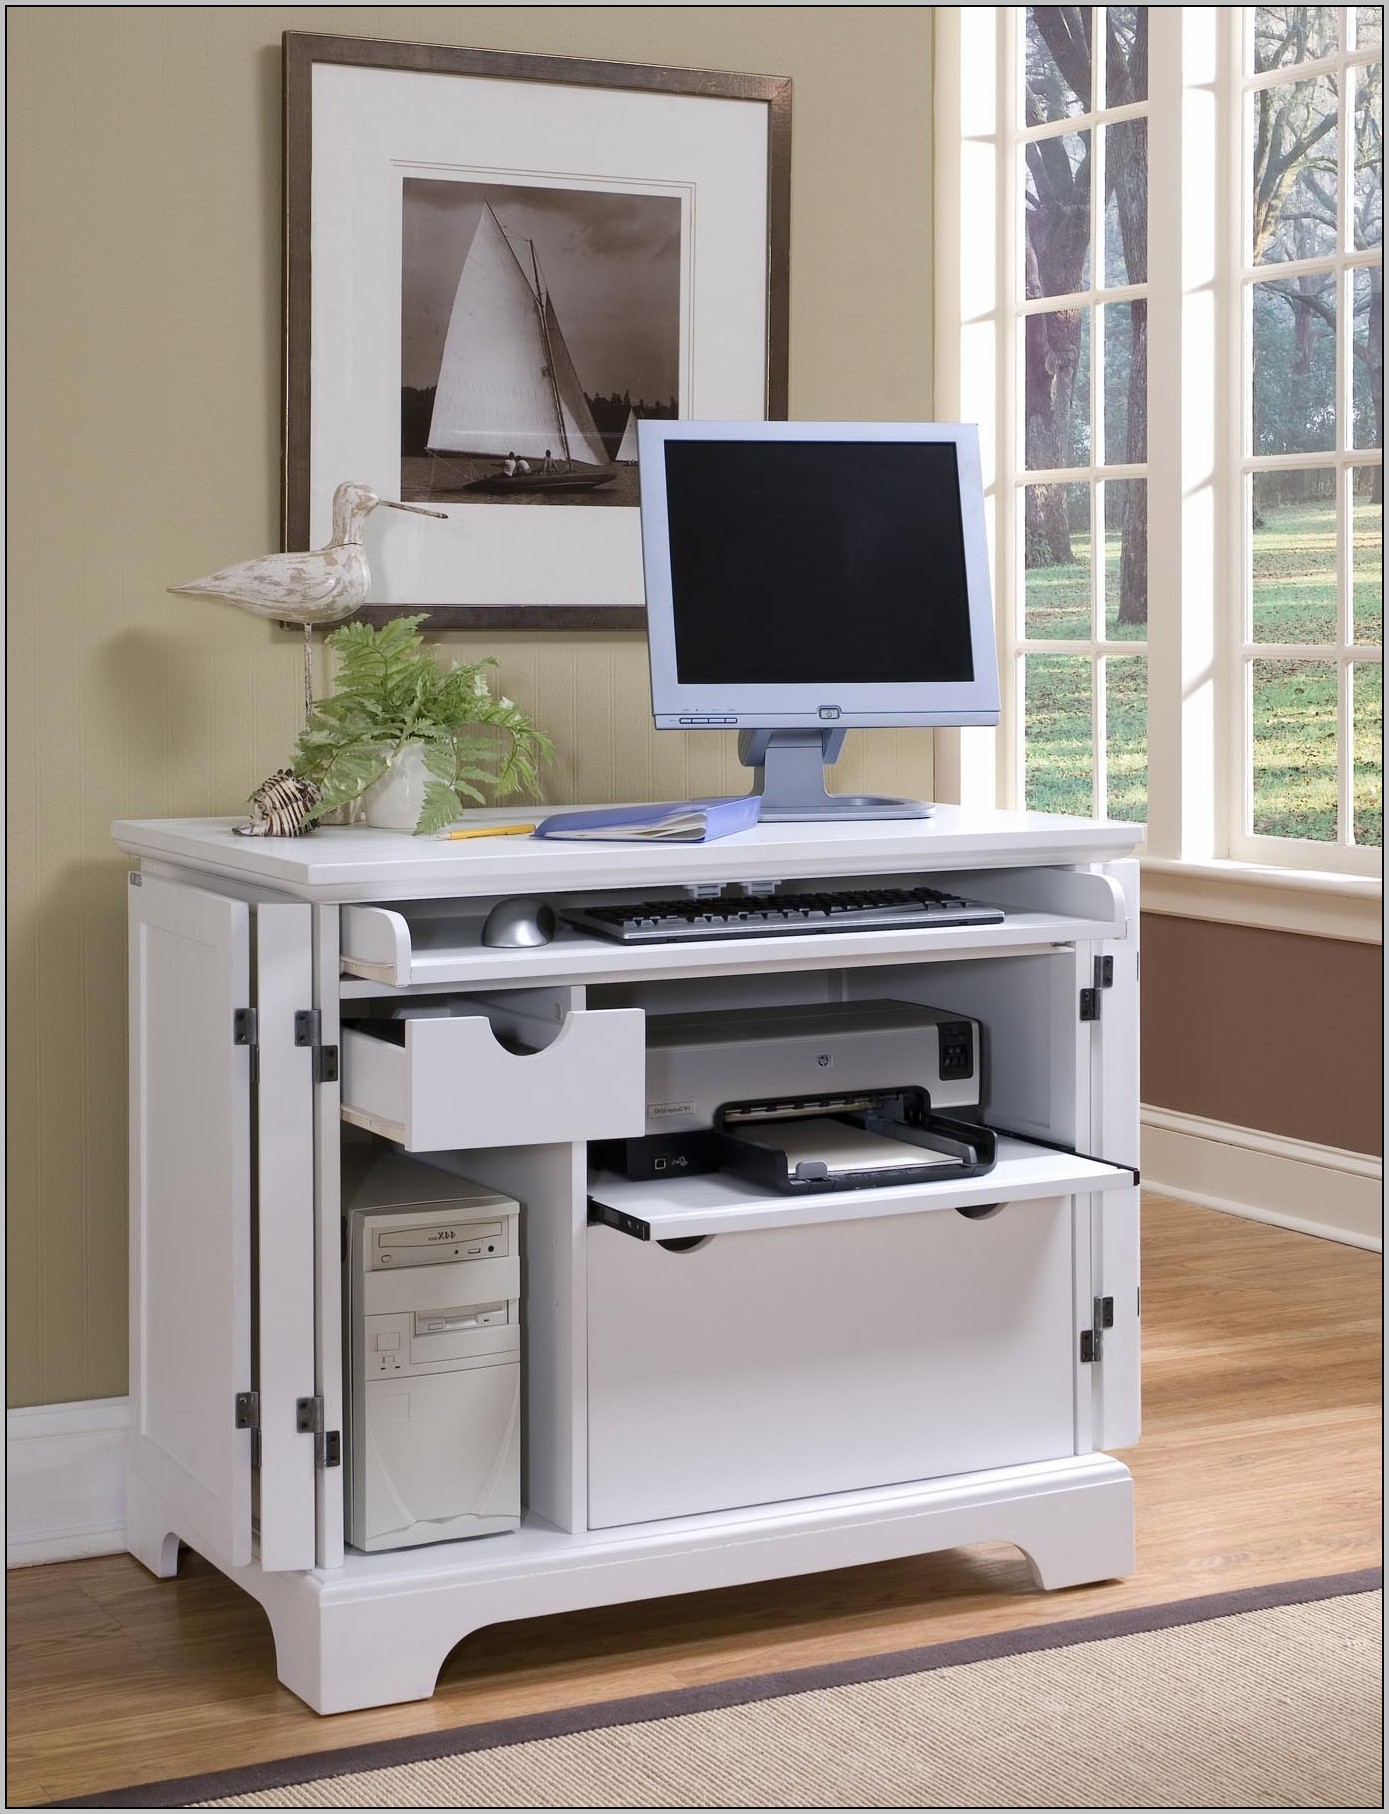 Compact Computer Desk With Storage - Desk : Home Design Ideas #